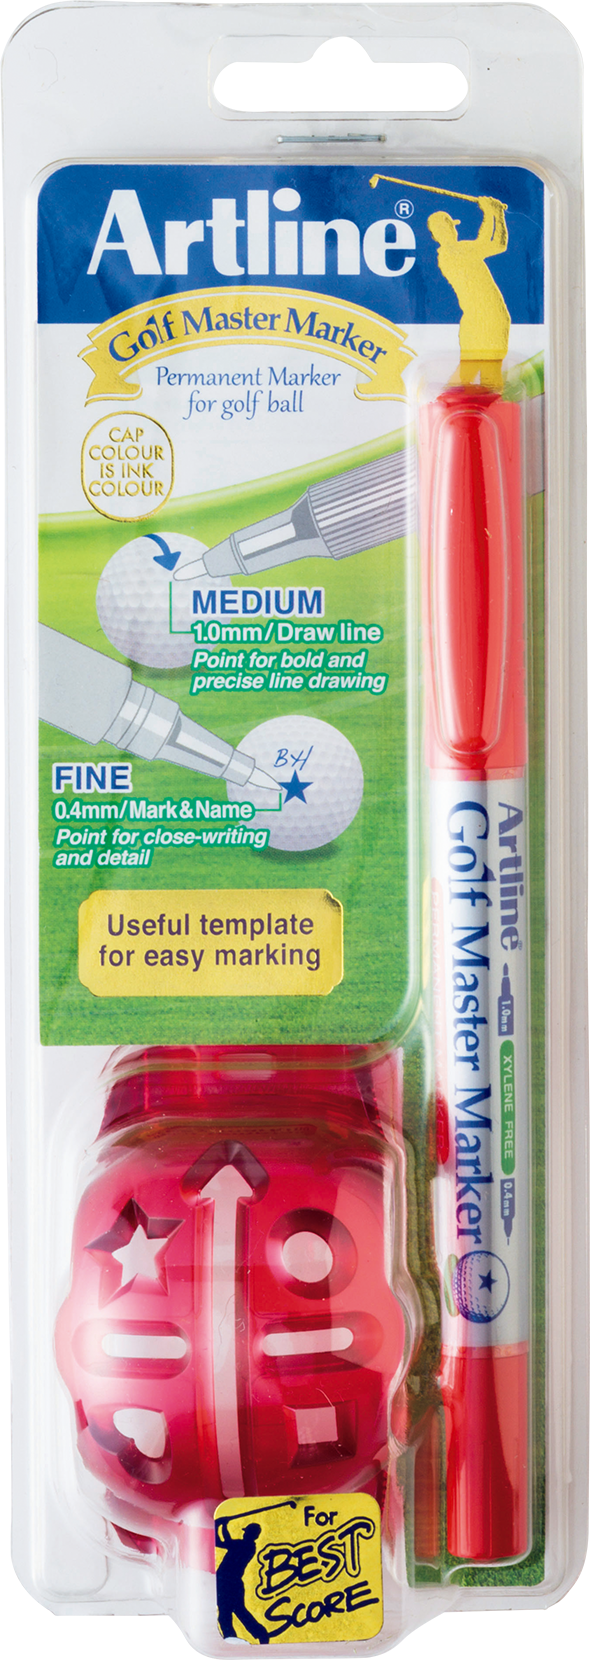 Artline Golf Master Marker Artline Golf Master Marker